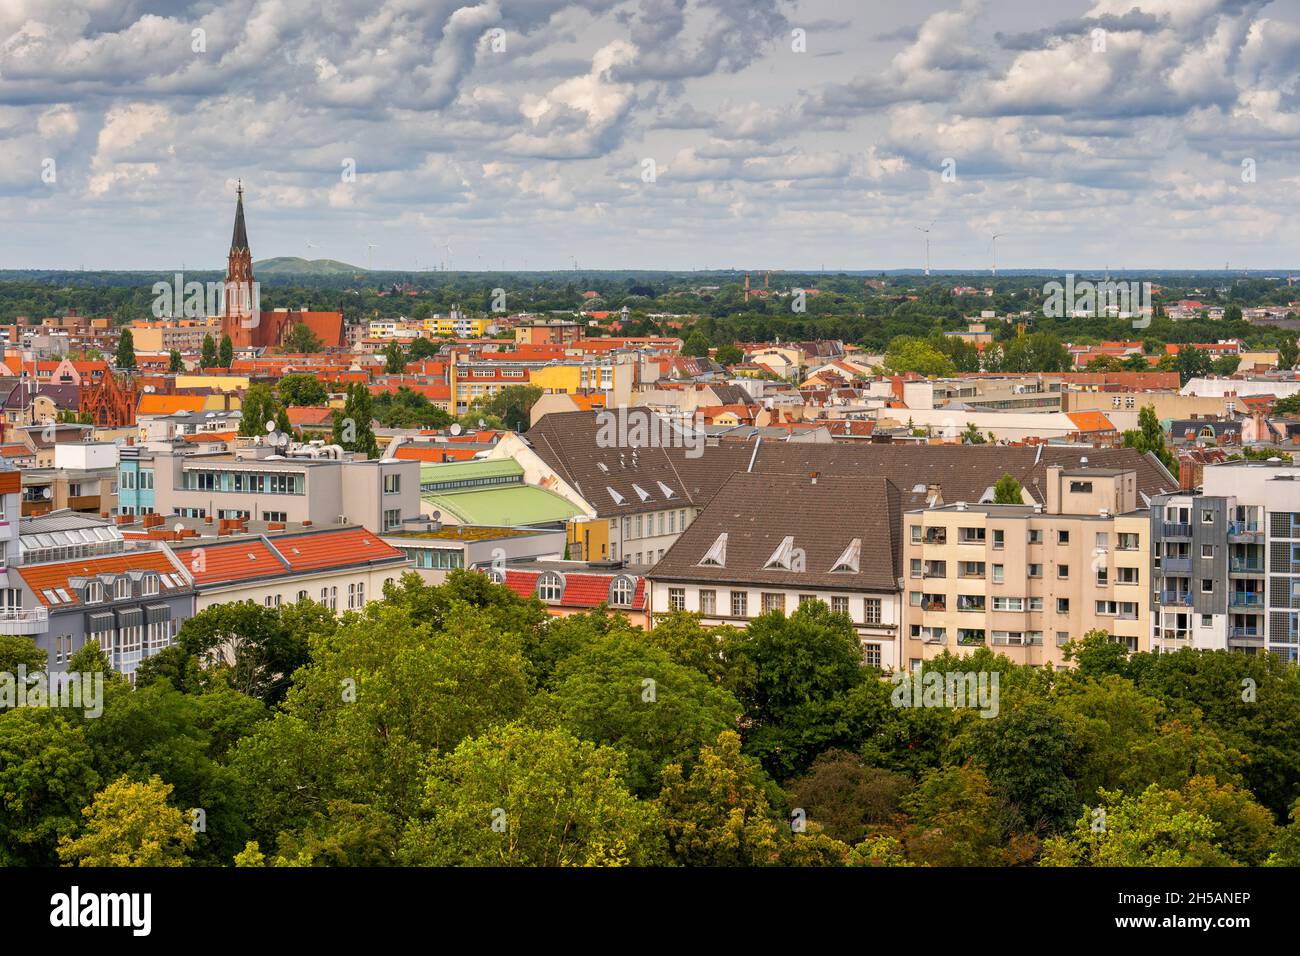 Gesundbrunnen district cityscape from Humboldthain Park in city of Berlin, Germany. Stock Photo